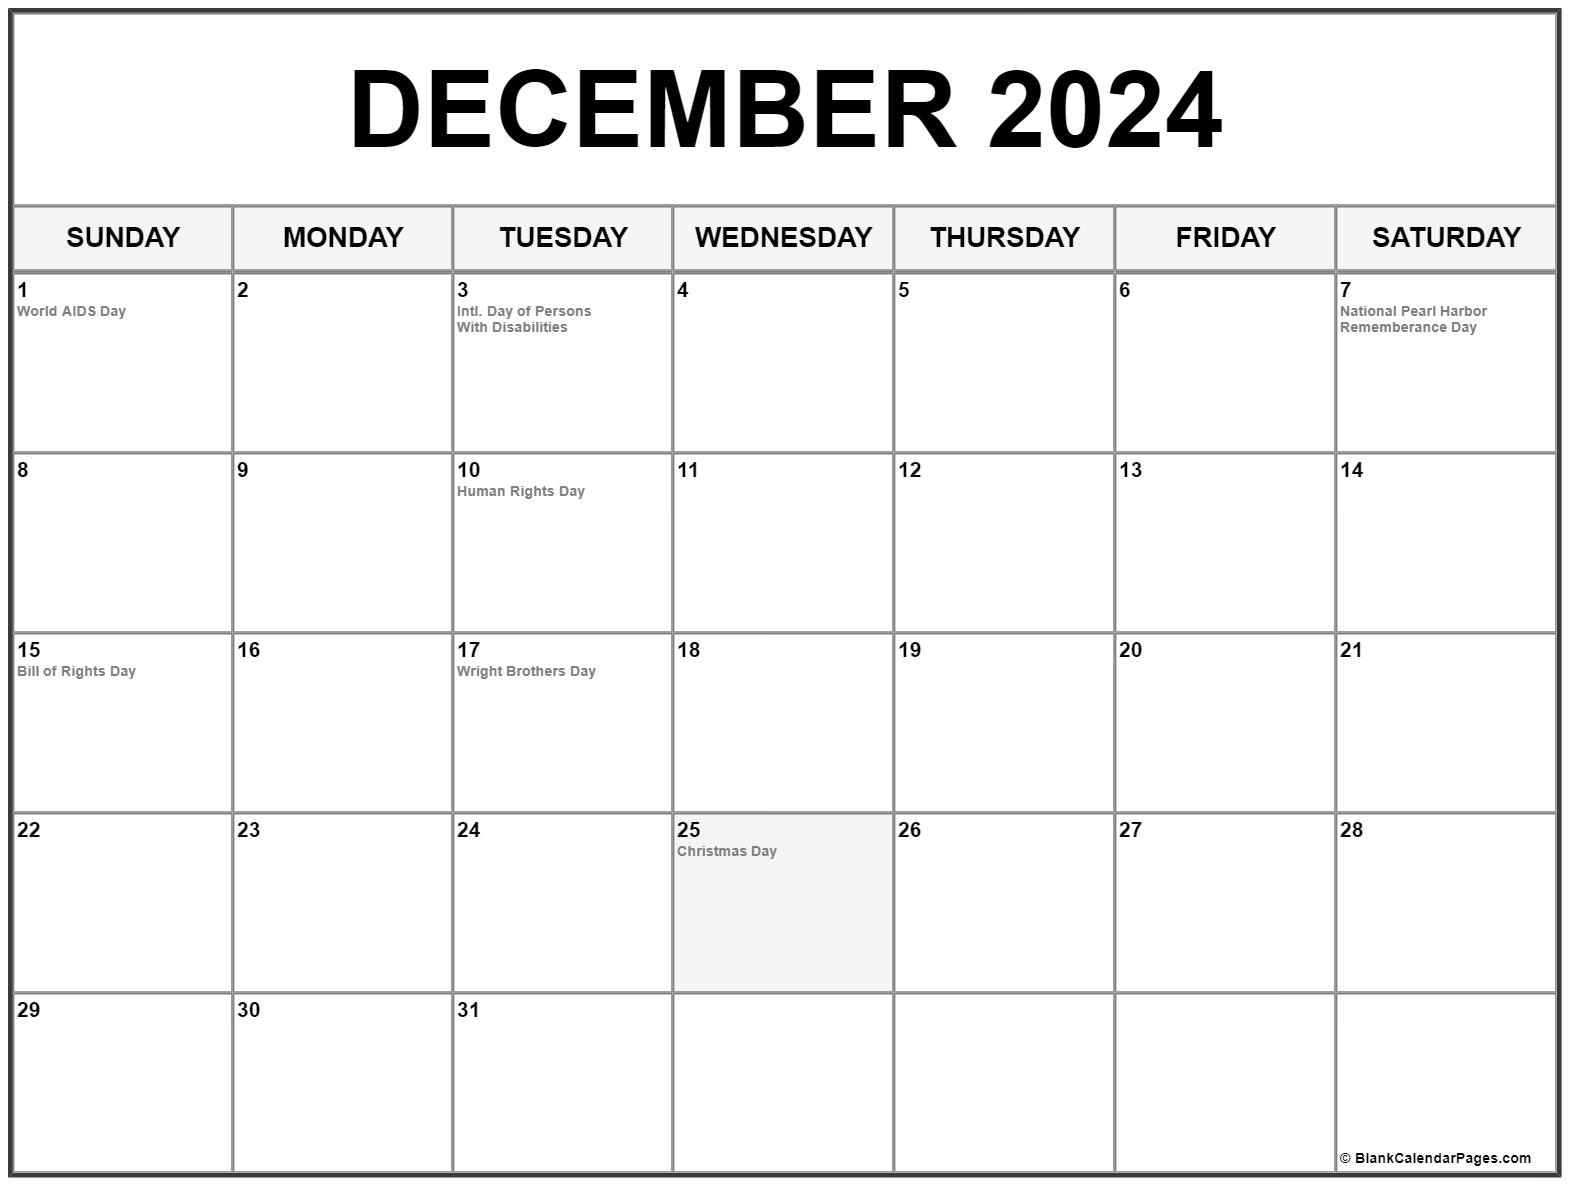 December 2024 Calendar With Holidays 2024 Summer Solstice | Free Printable 2024 Calendar With Holidays December